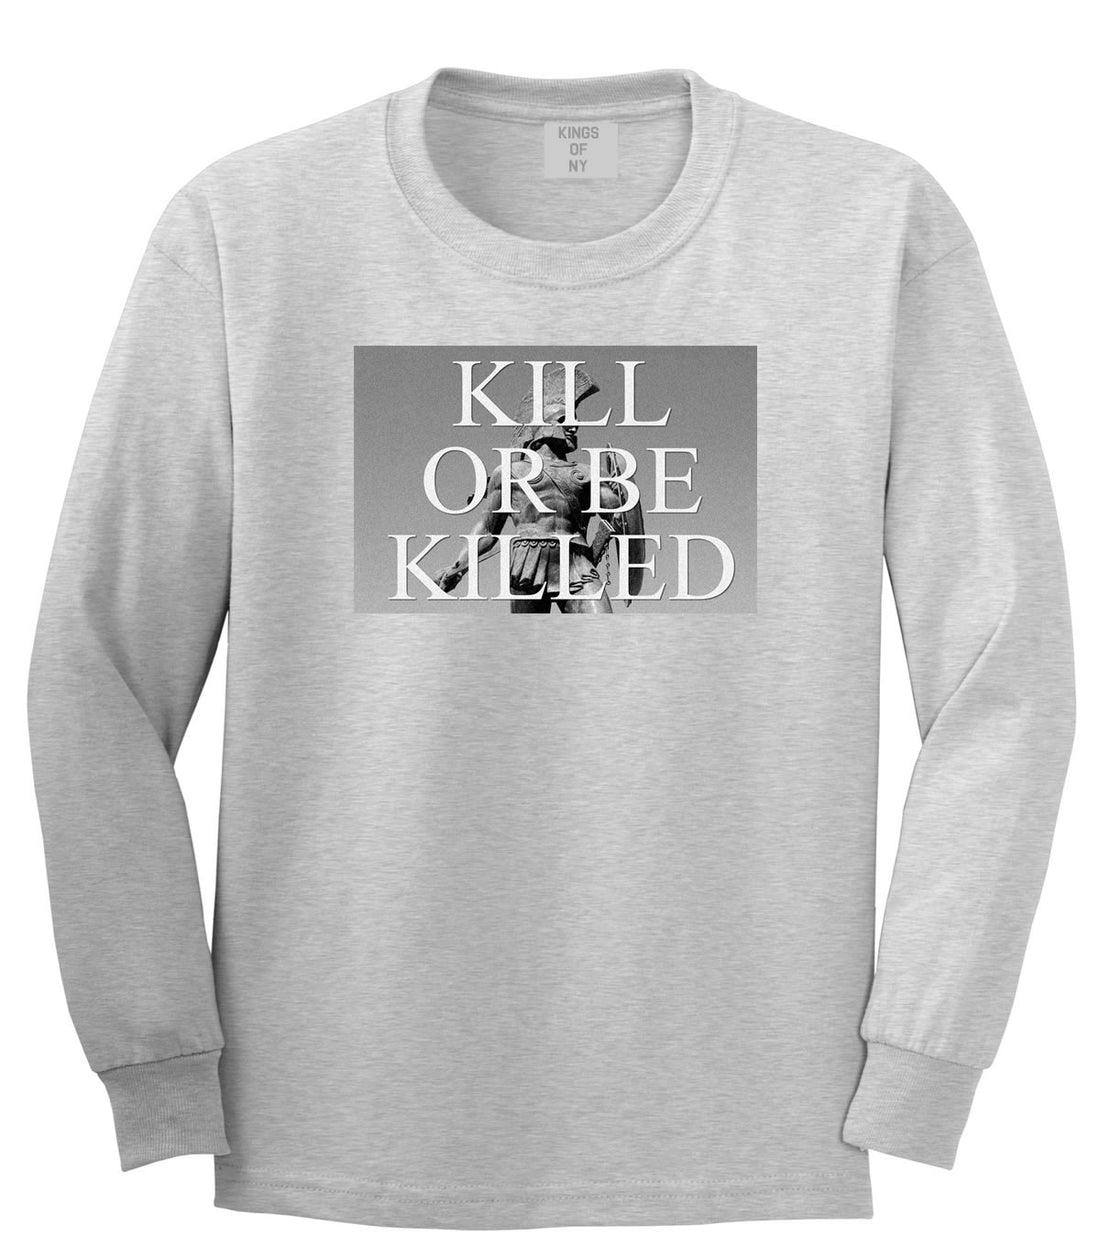 Kill Or Be Killed Boys Kids Long Sleeve T-Shirt in Grey by Kings Of NY